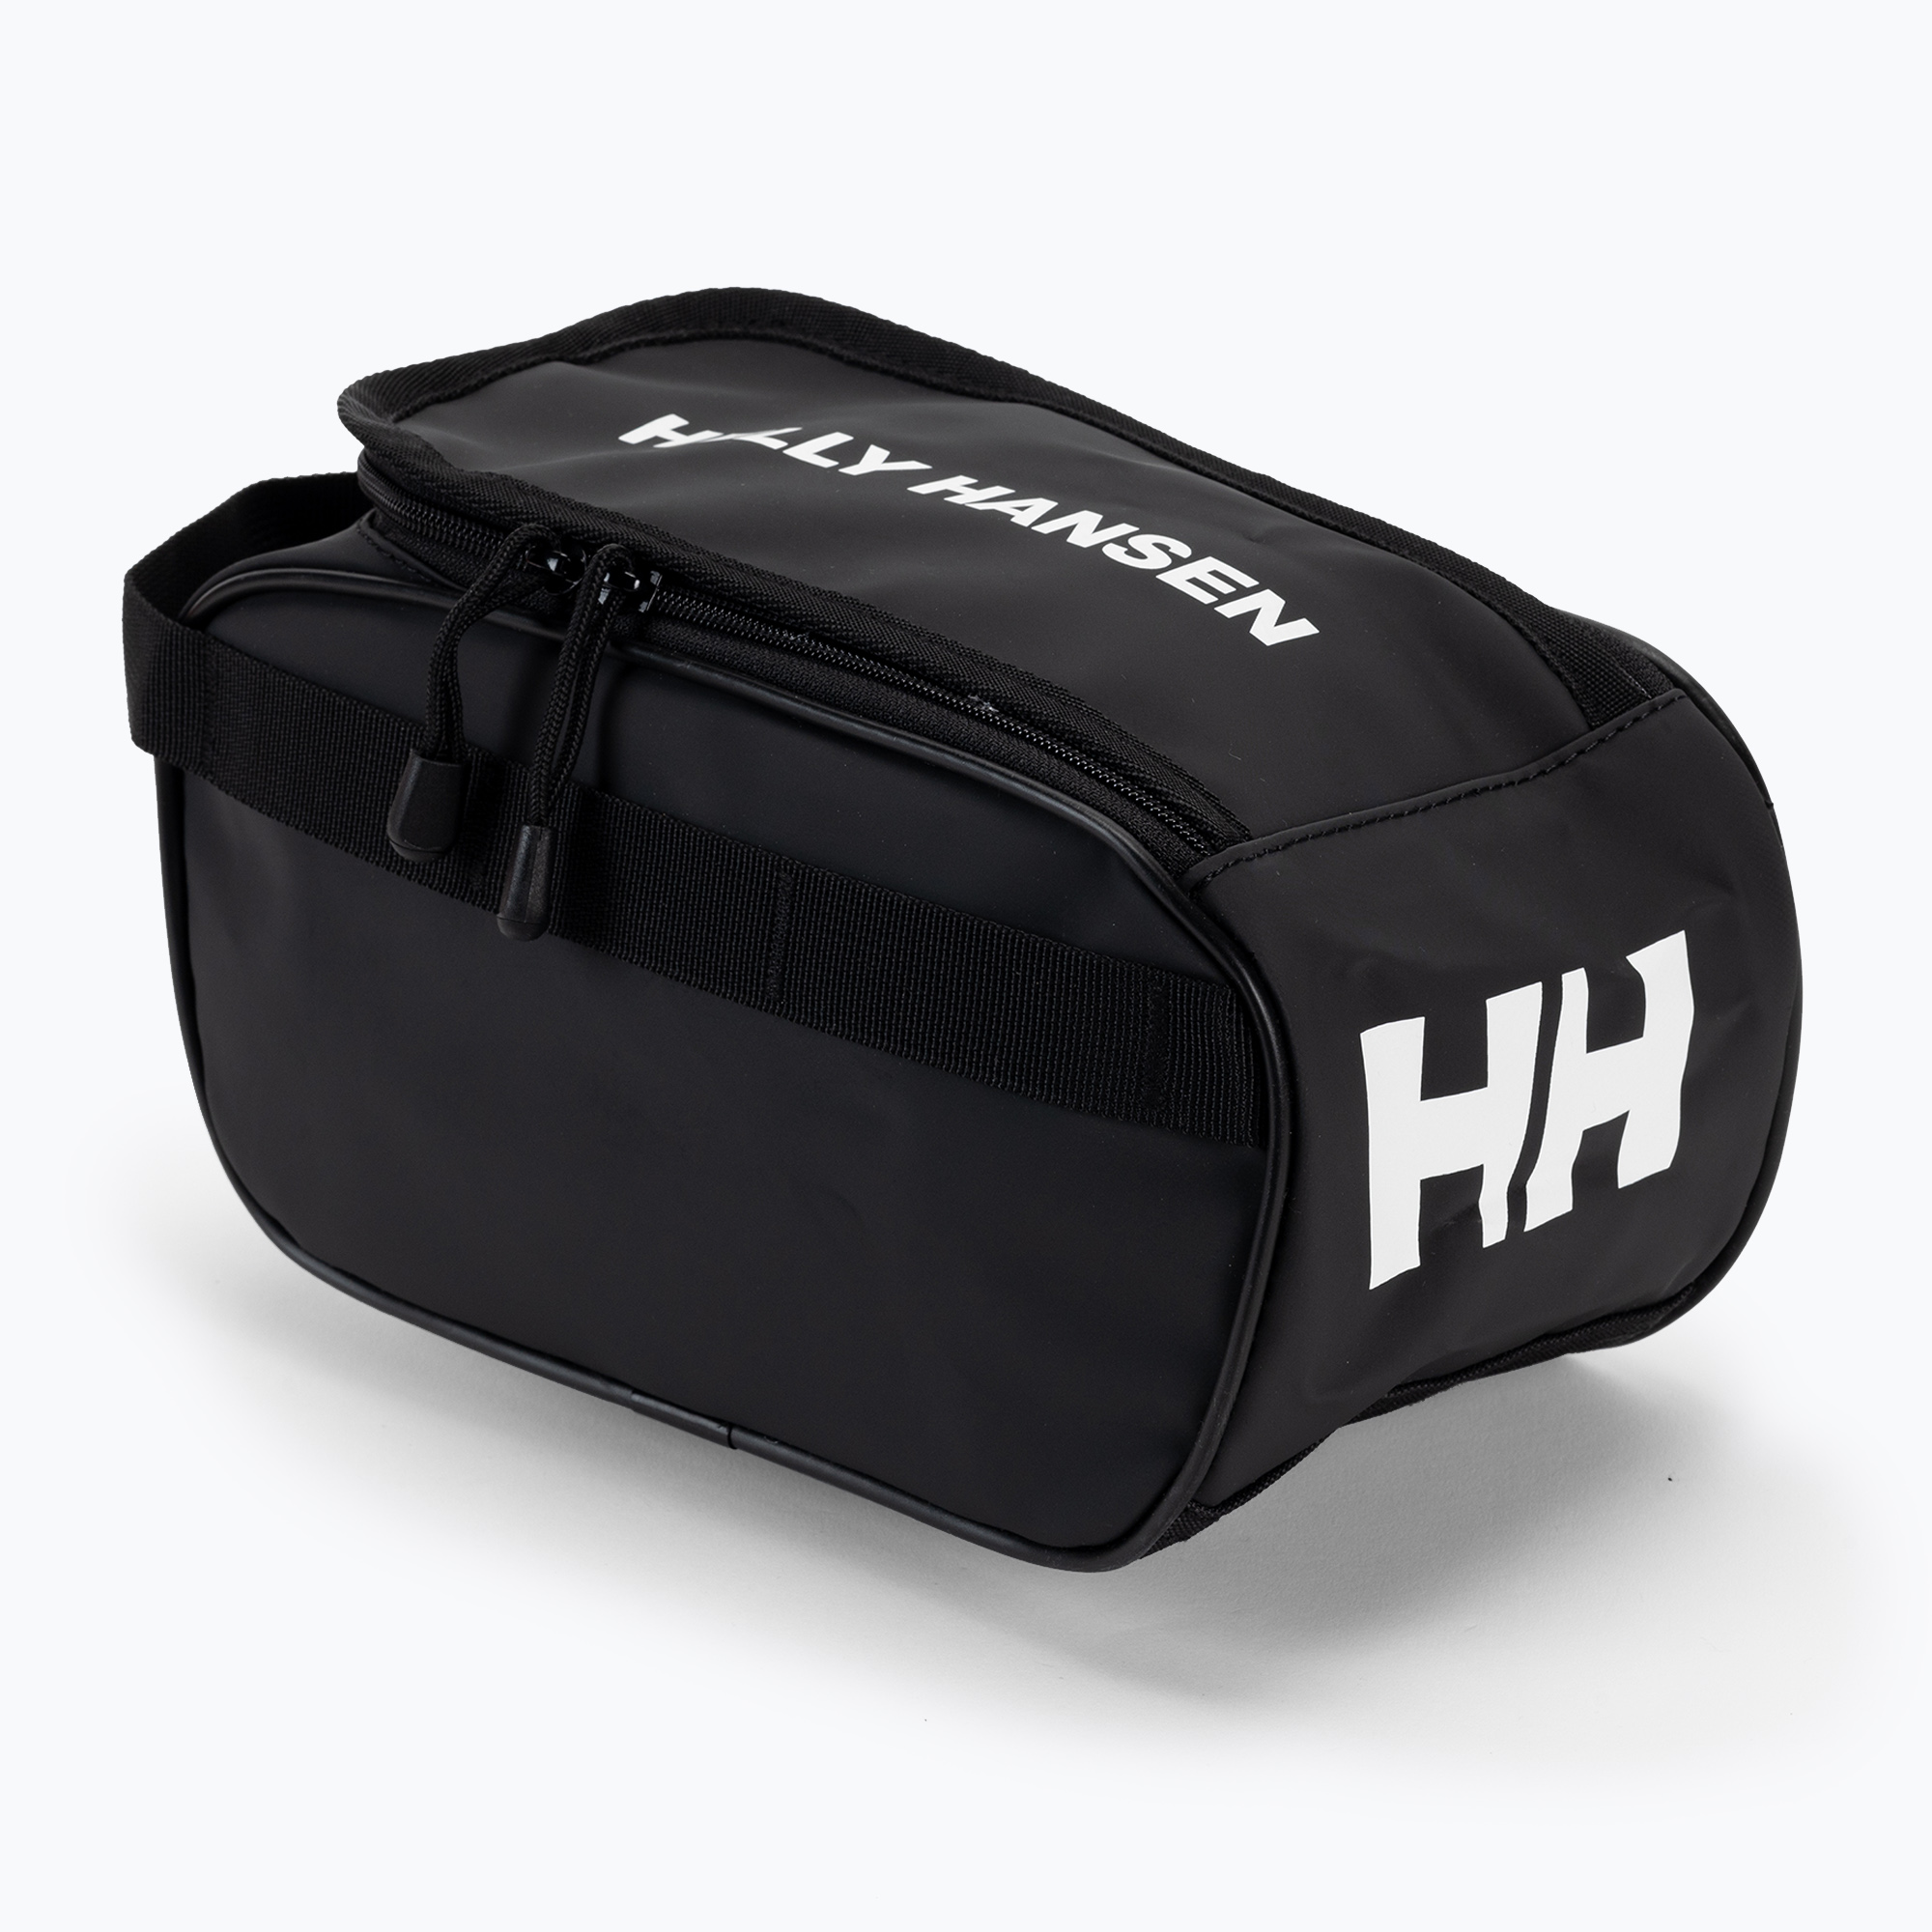 Helly Hansen H/H Scout Wash Bag negru 67444_990 sac de spălare pentru drumeții